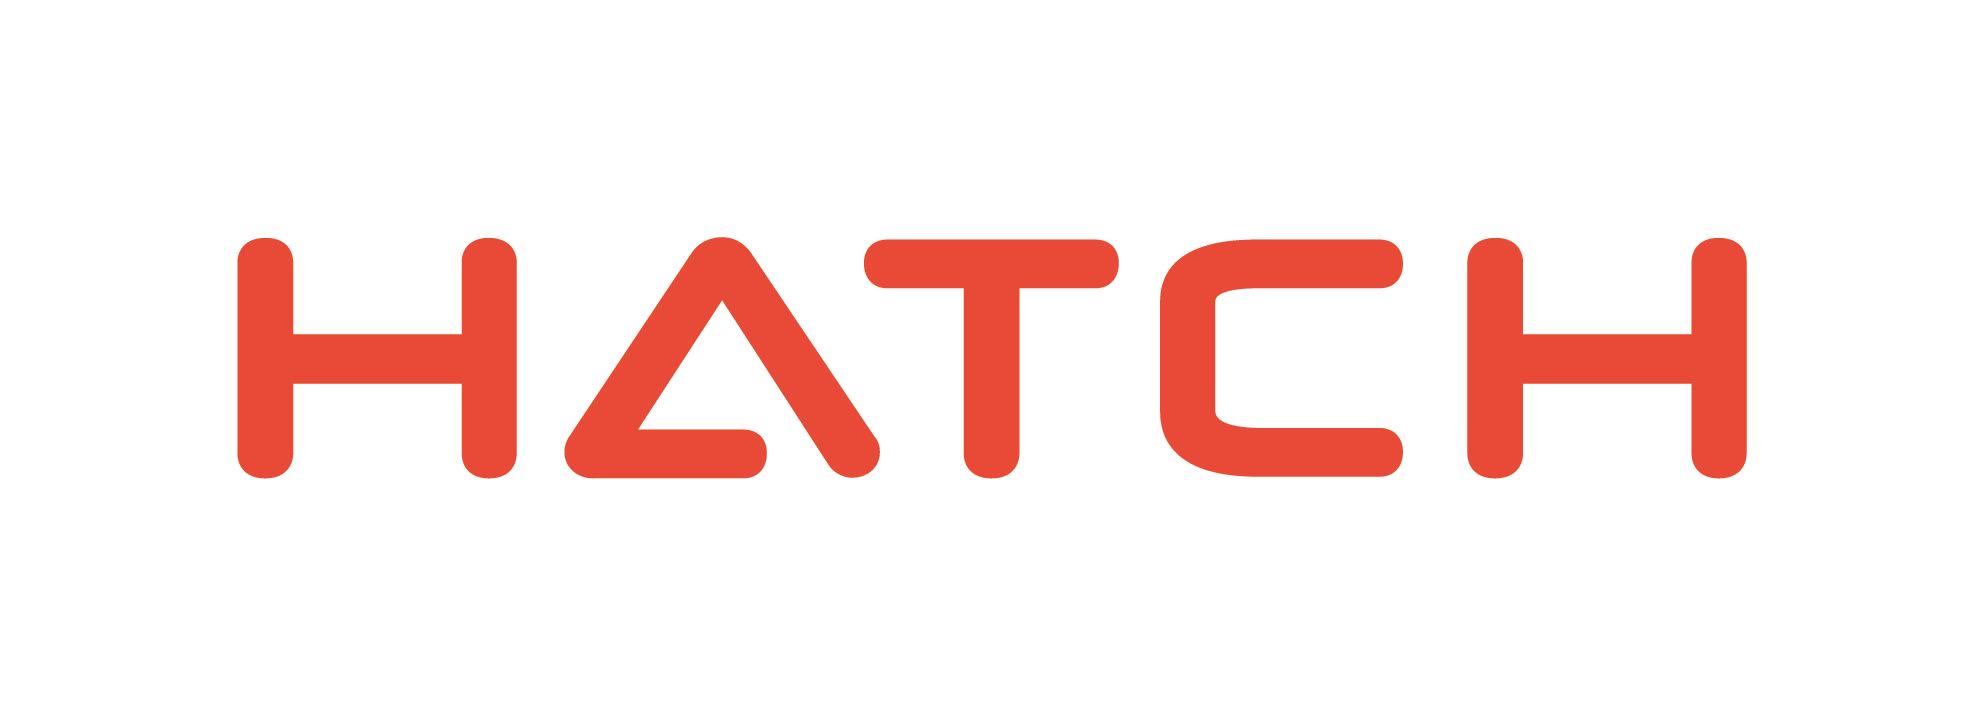 https://ilead.engineering.utoronto.ca/wp-content/uploads/sites/16/2020/11/hatch-logo.jpg